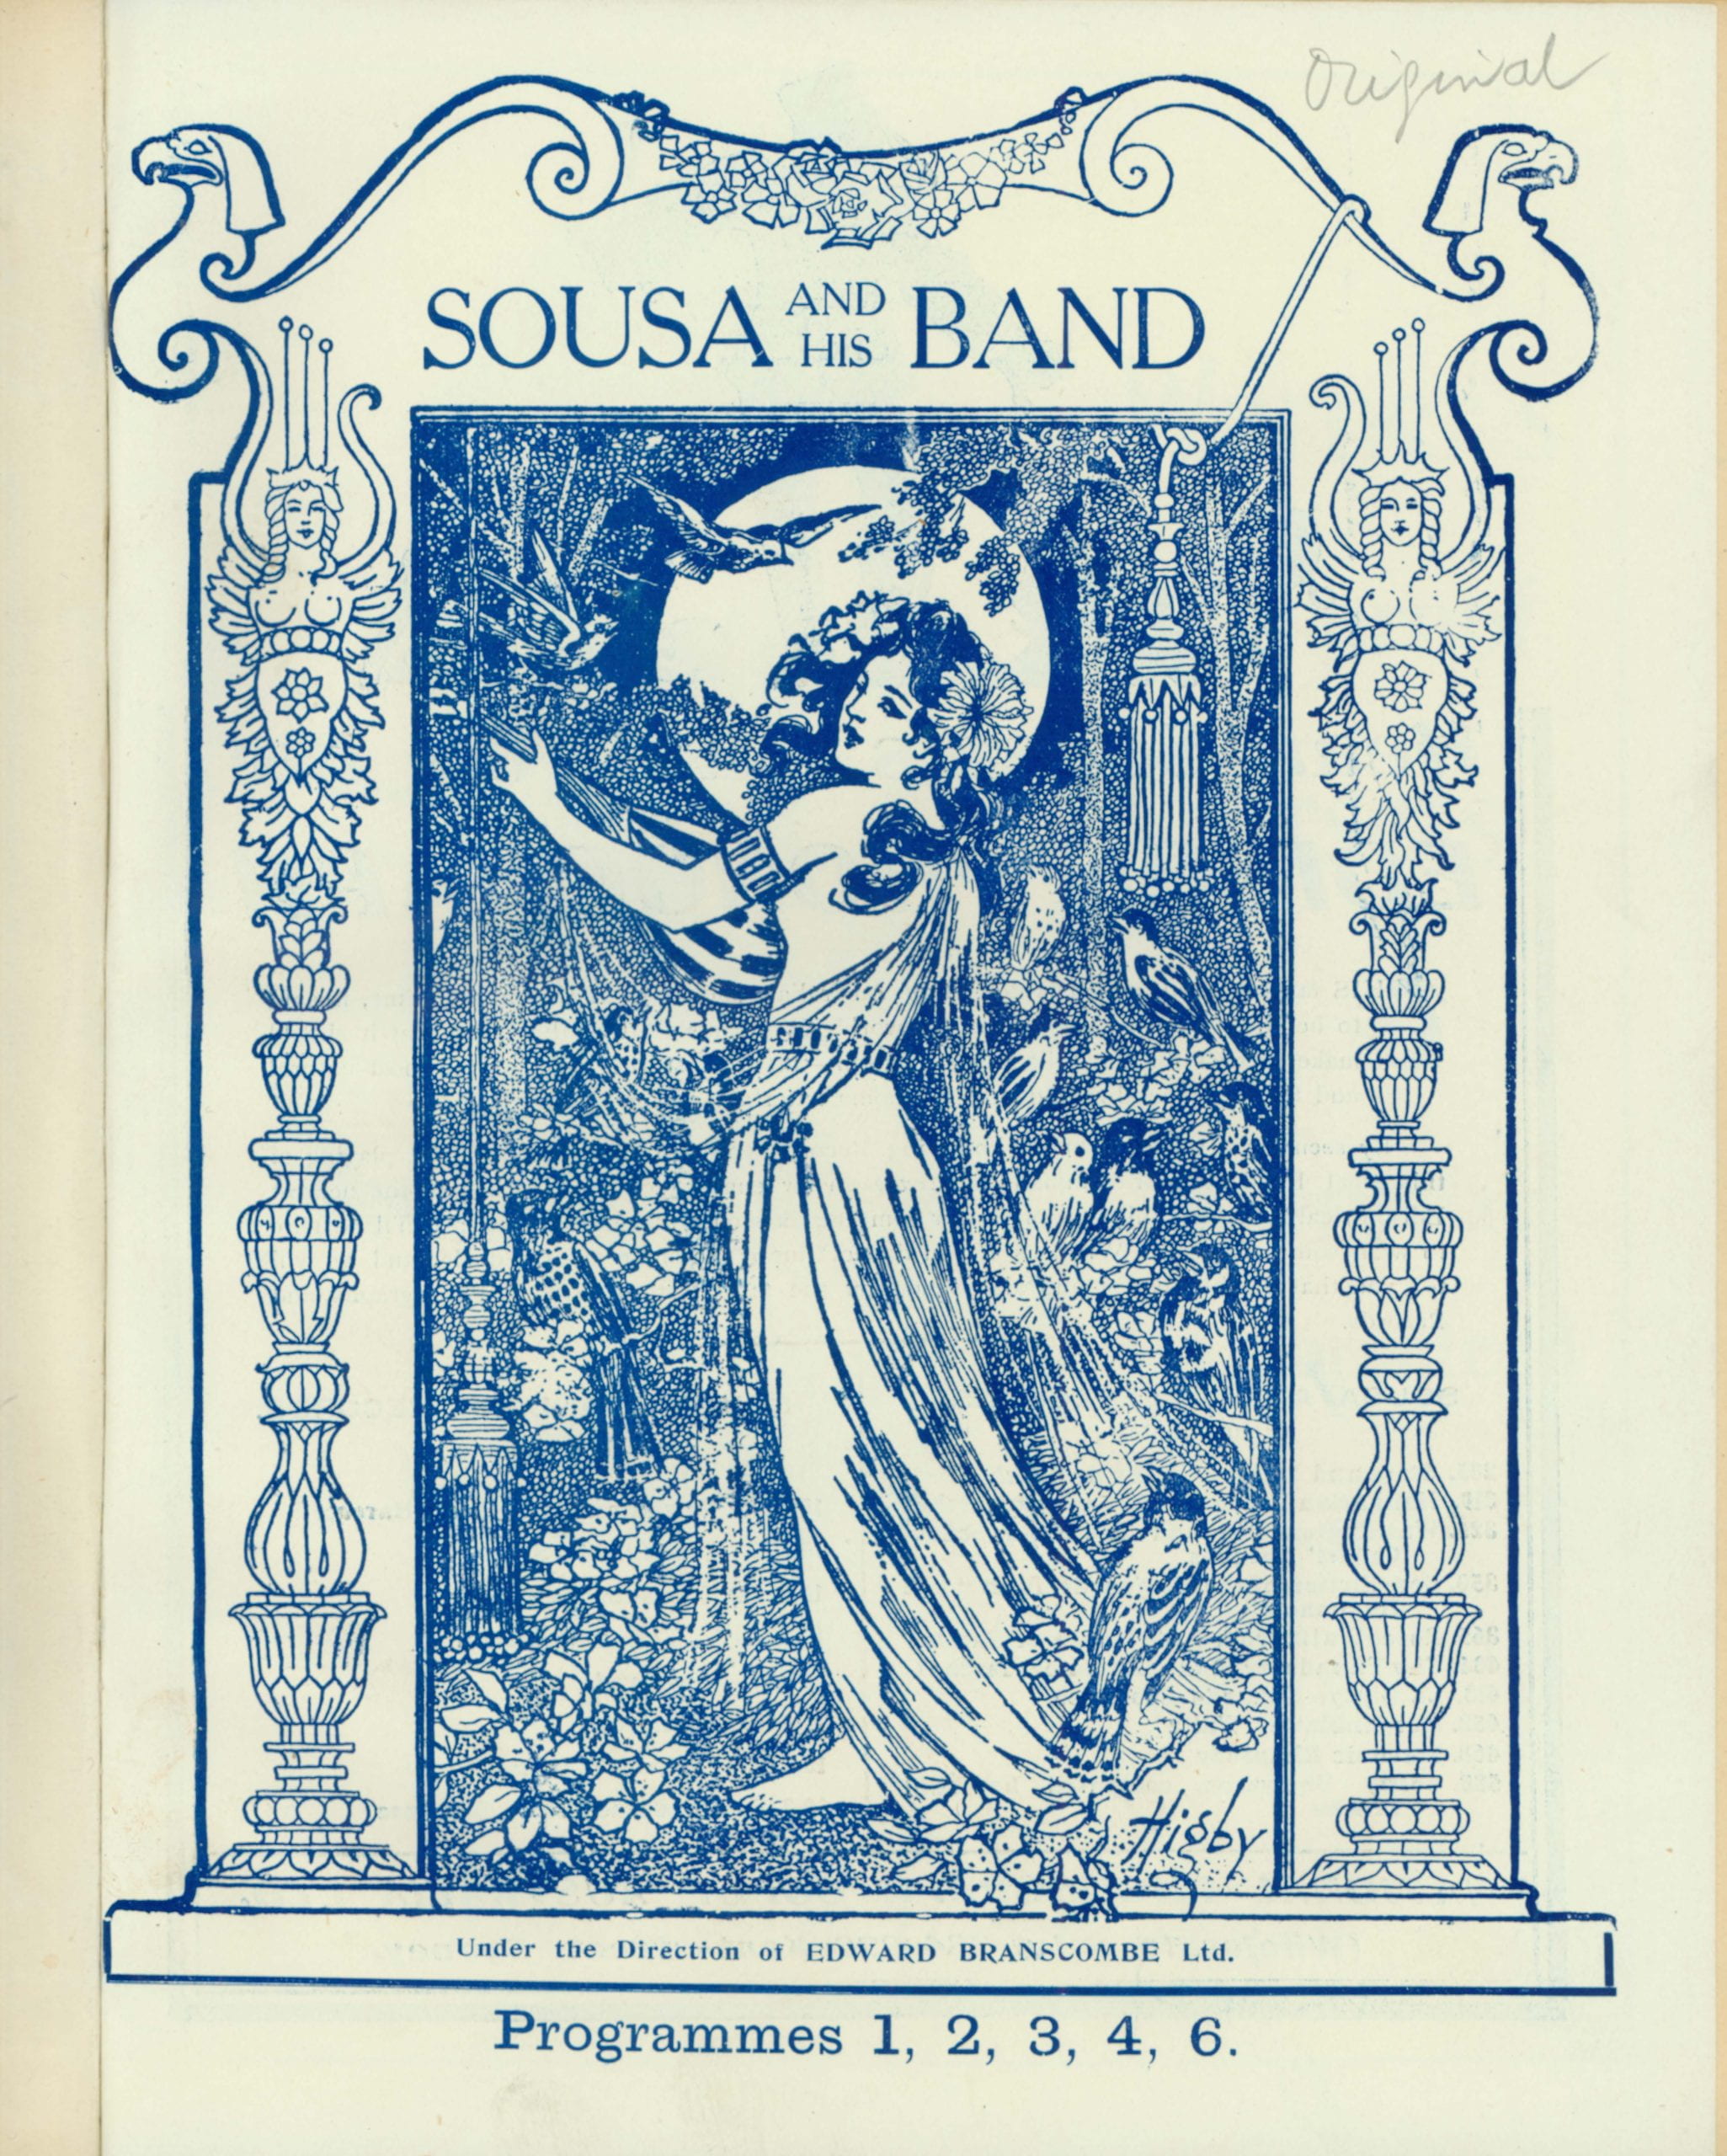 Blue Art Nouveau design of a women holding a lute, surrounded by birds.